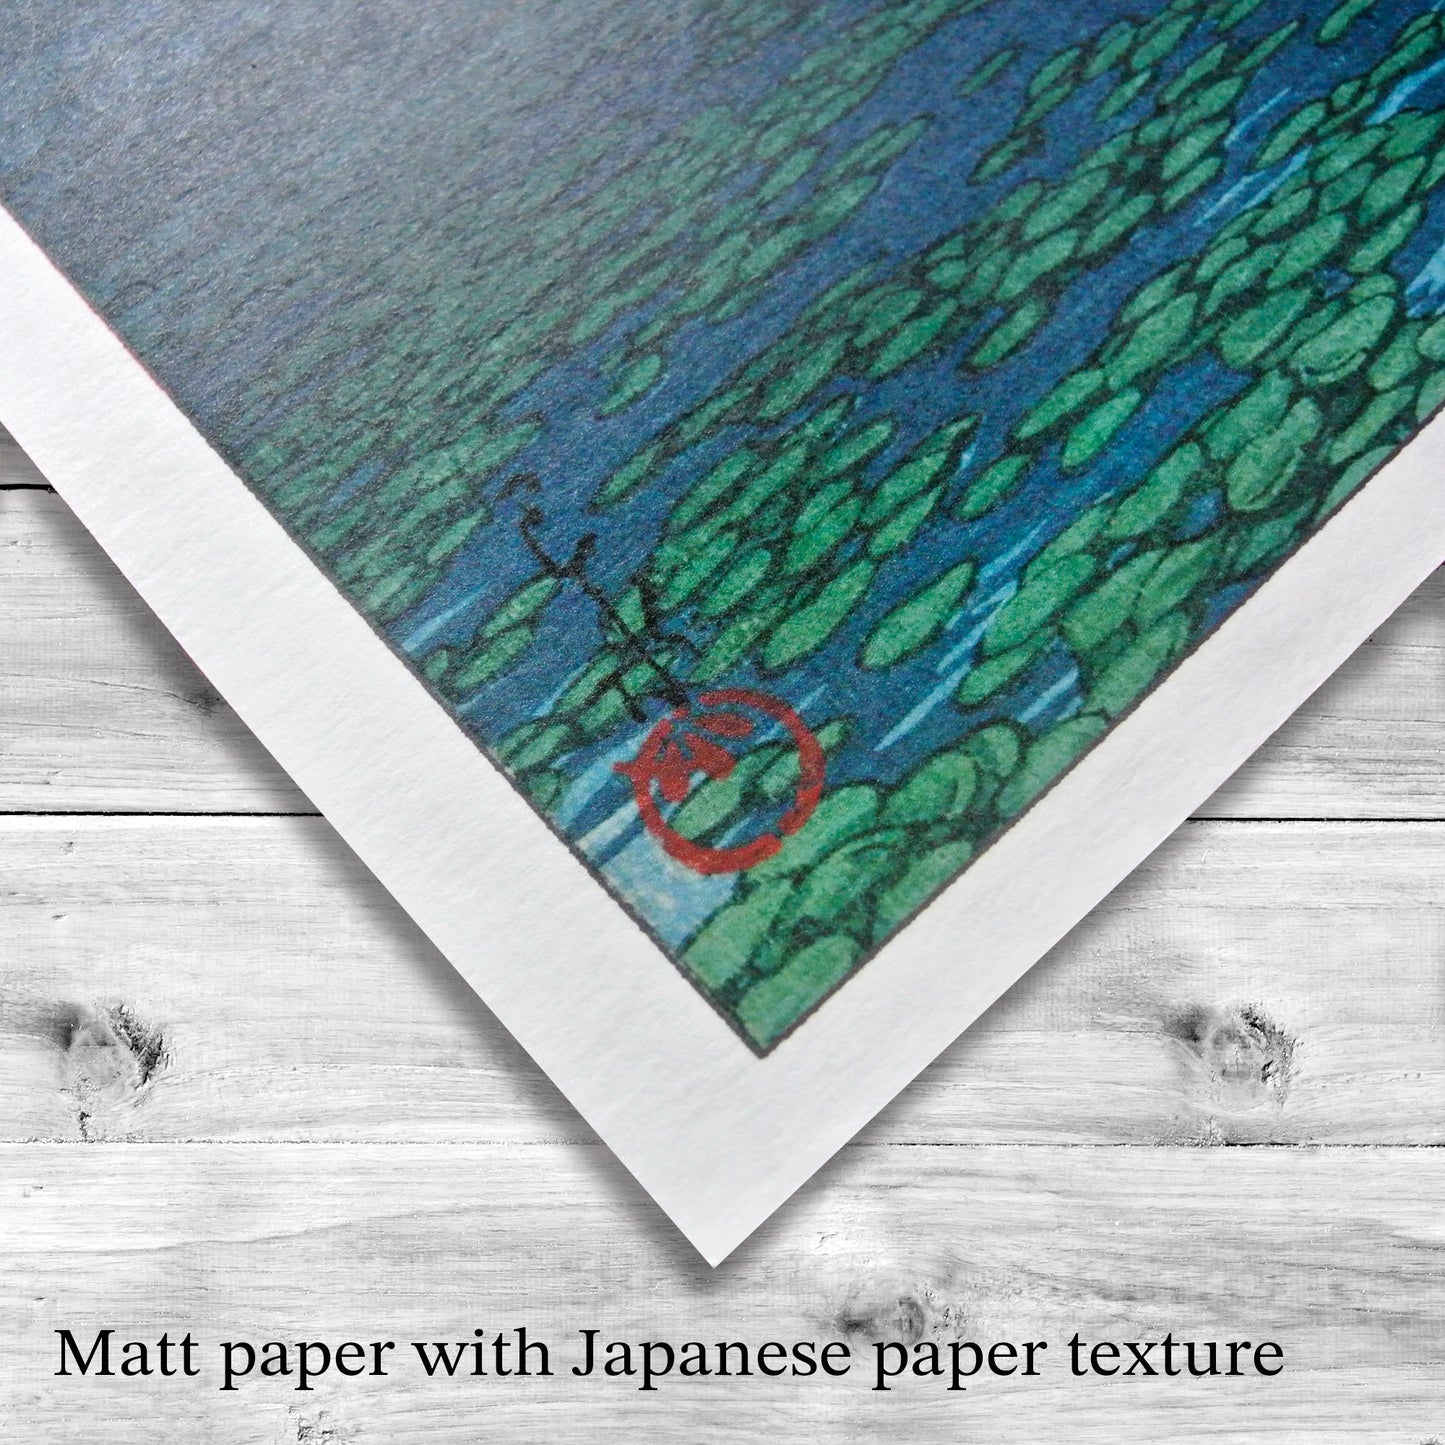 set of 2 - Kawase Hasui ,Japanese Art, 11×17（margin 12 ×17.7) inch, Made in Japan,Woodblock Print, Ukiyo-e, Shipping free,004